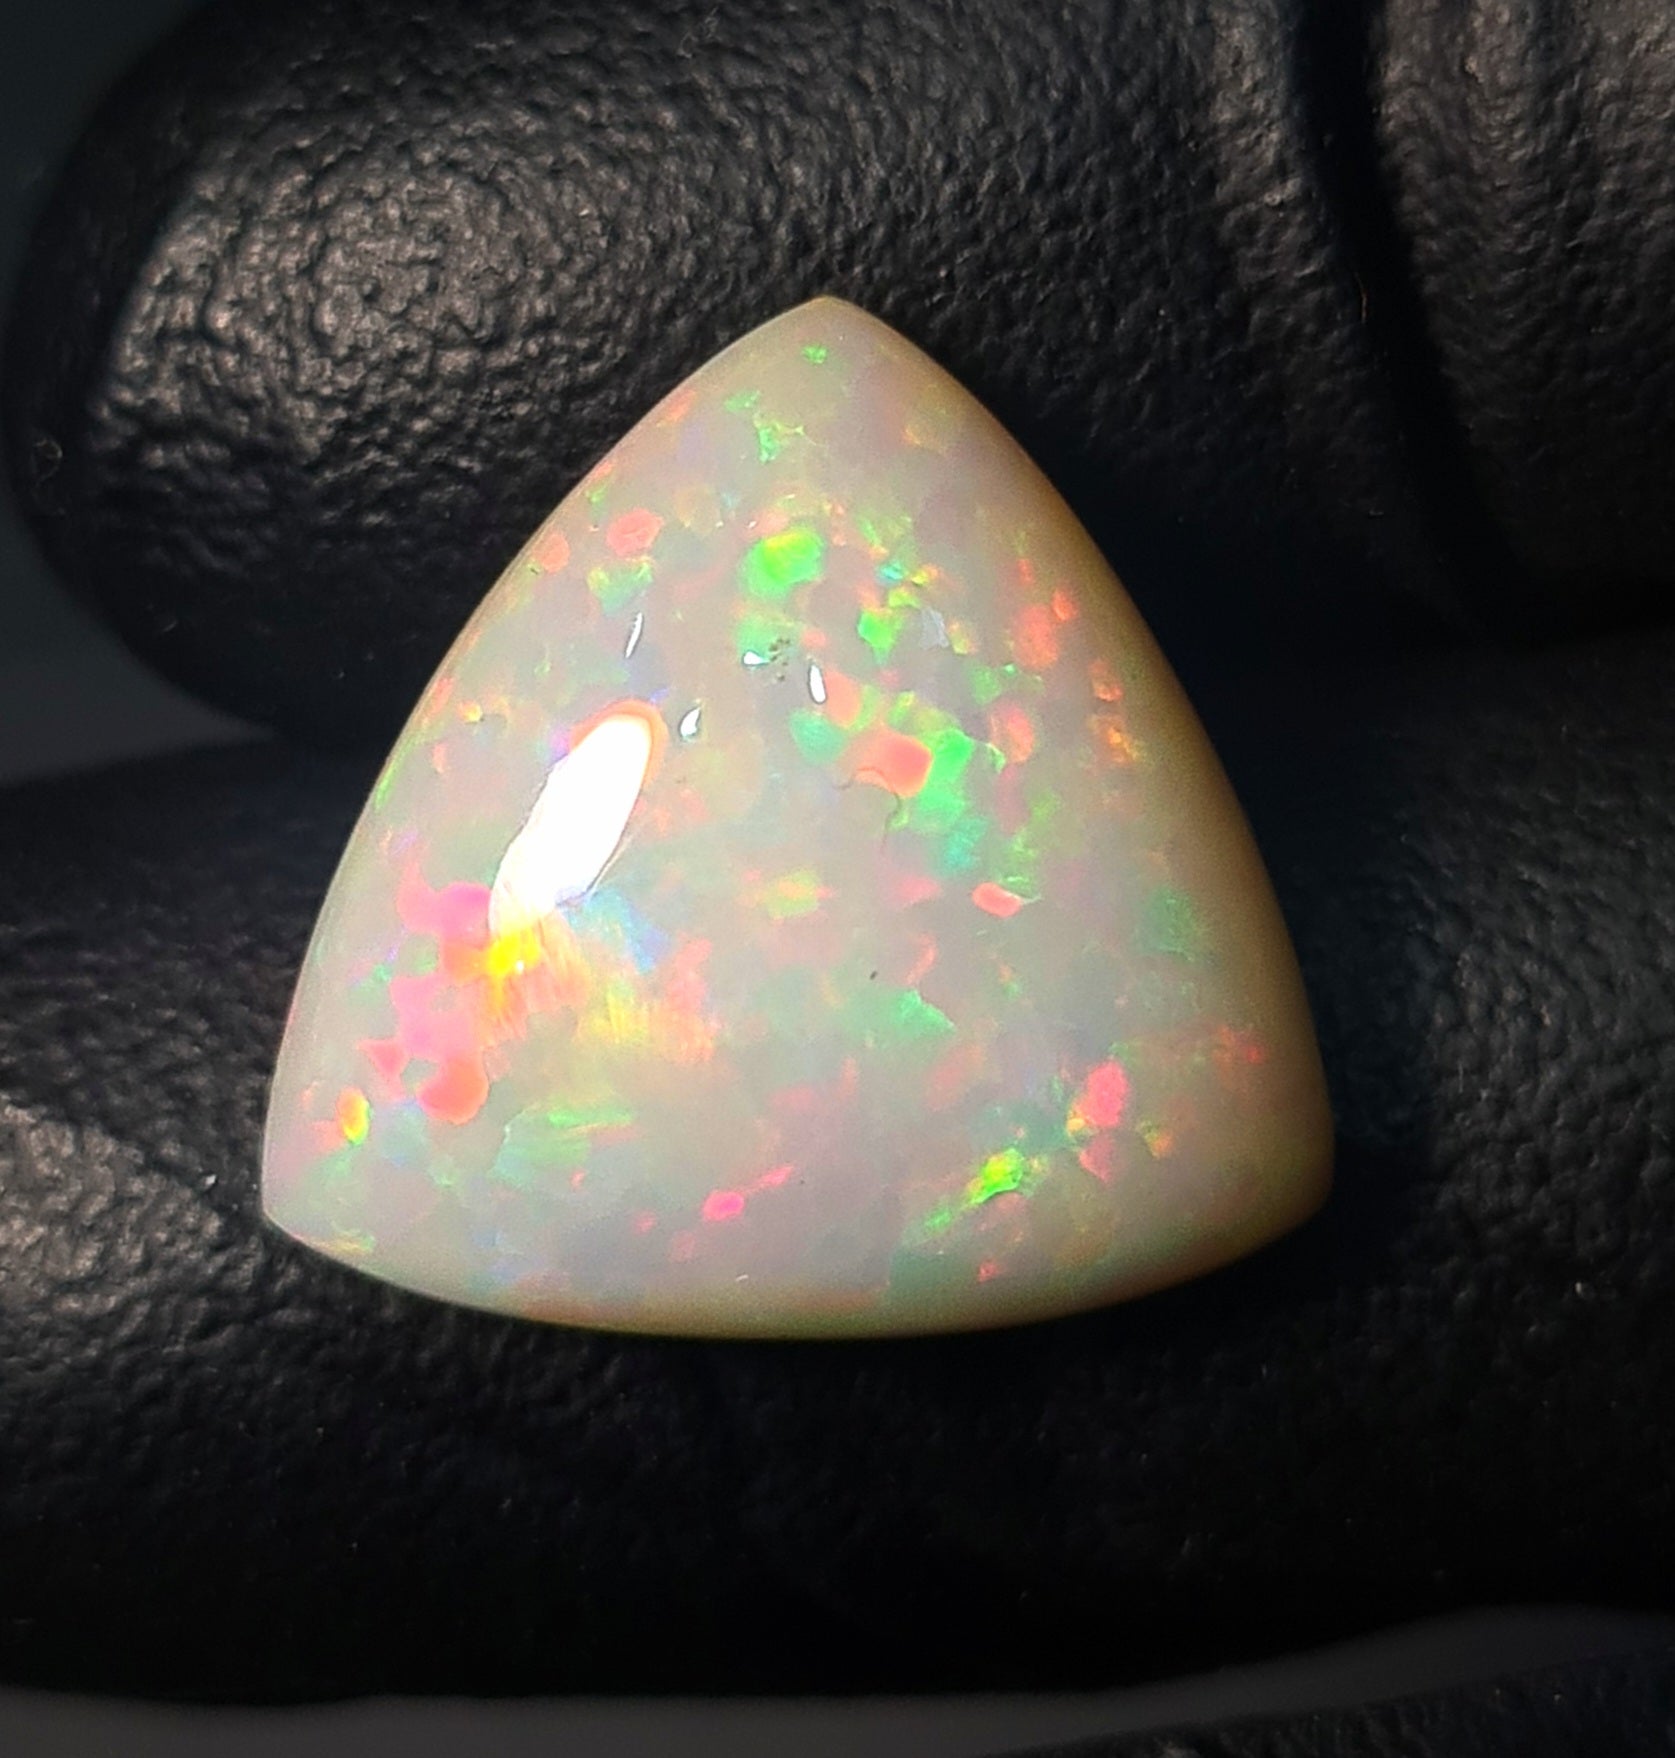 1 Pcs Of Natural Ethopian Opal Trillion Shape  |WT: 8.4 Cts|Size:17mm - The LabradoriteKing